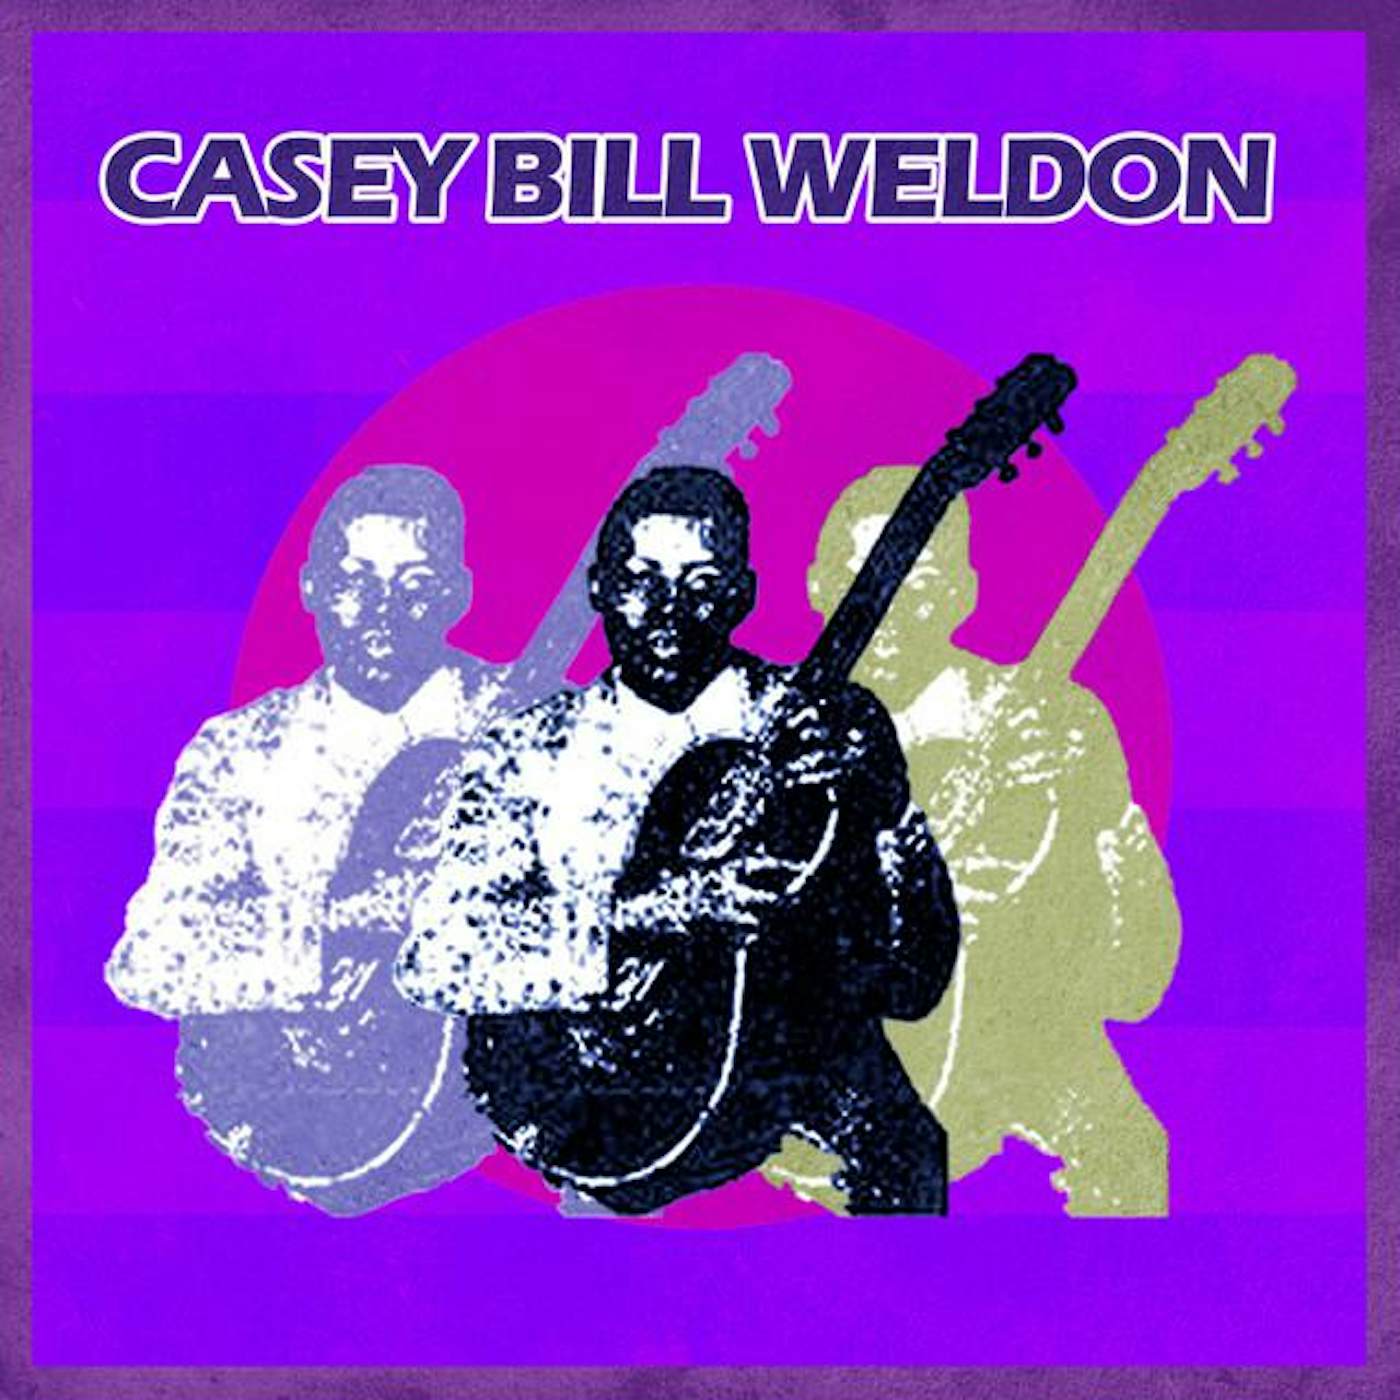 Casey Bill Weldon